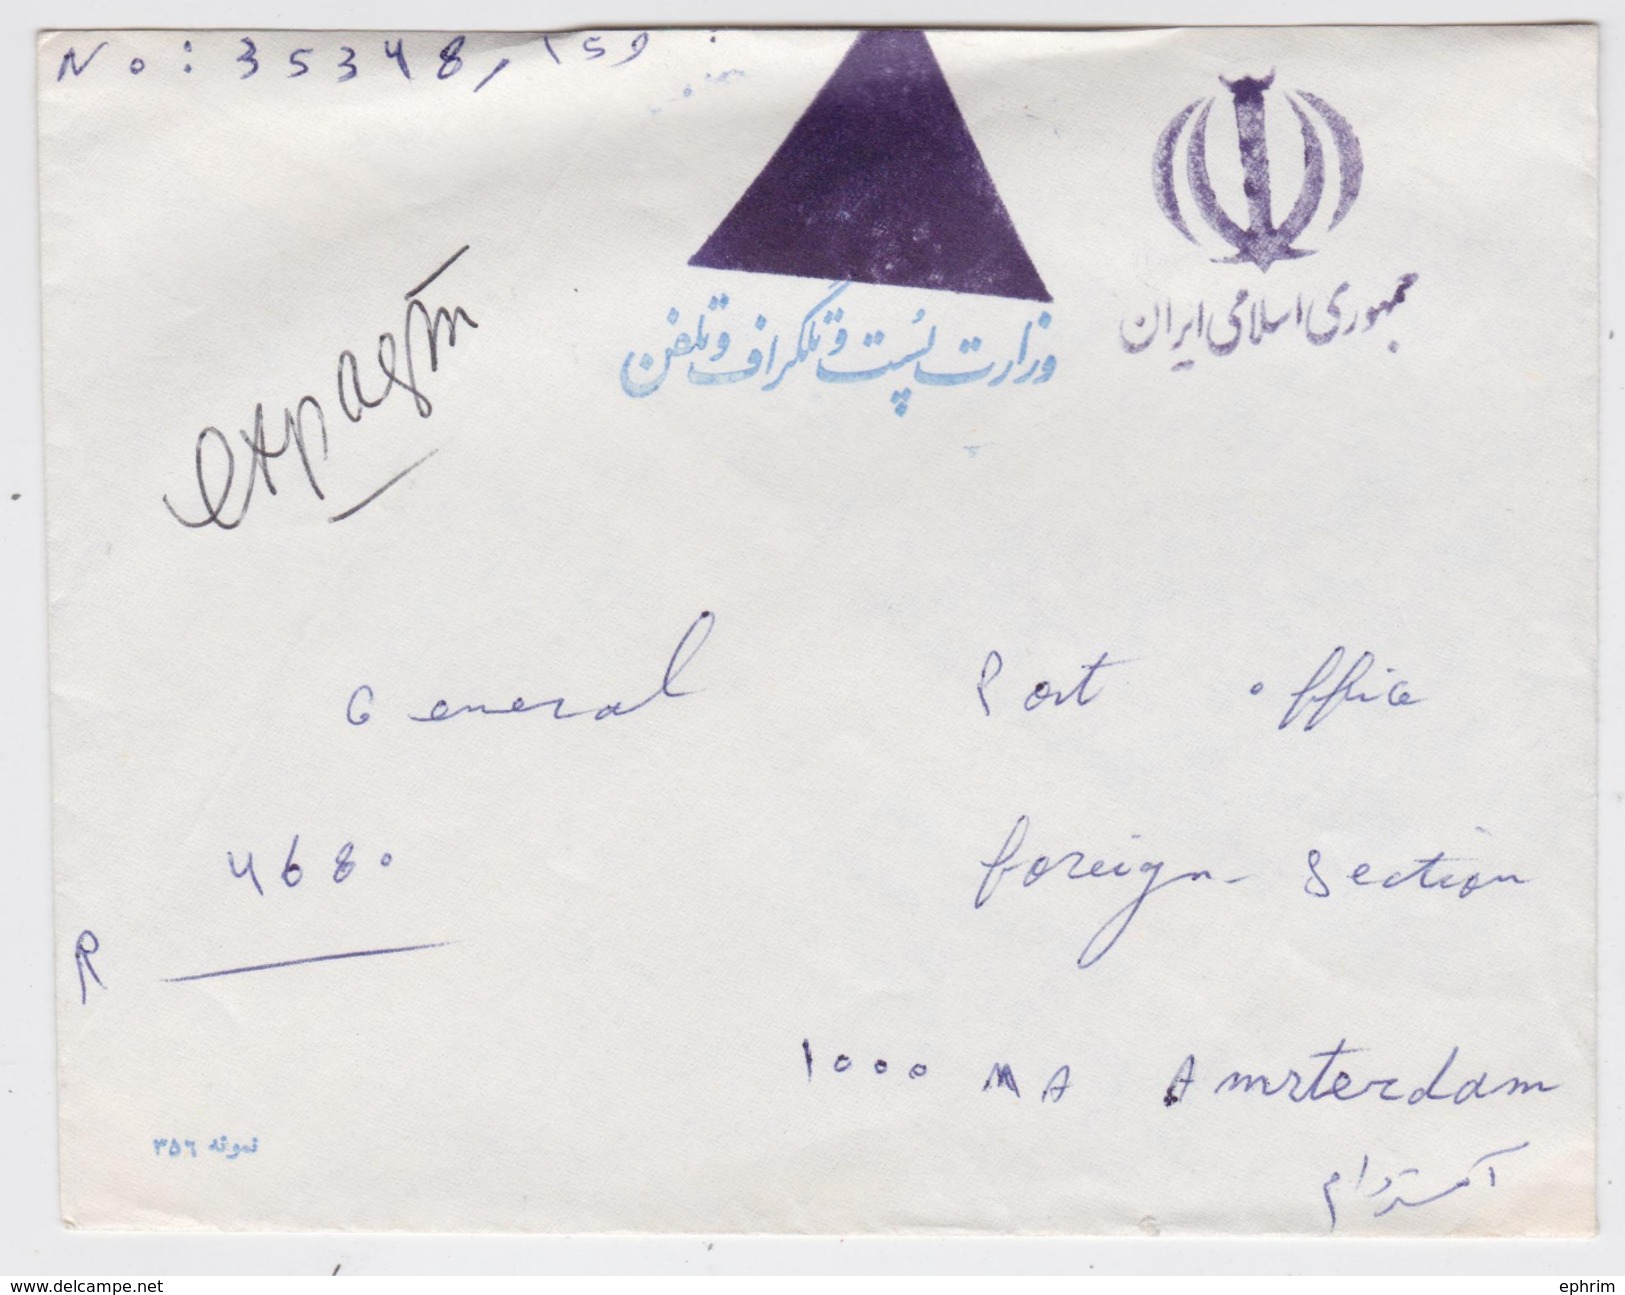 Téhéran - Tehran - Iran - Stampless Cover To Amsterdam - Post Mark - Marque Postale - Iran